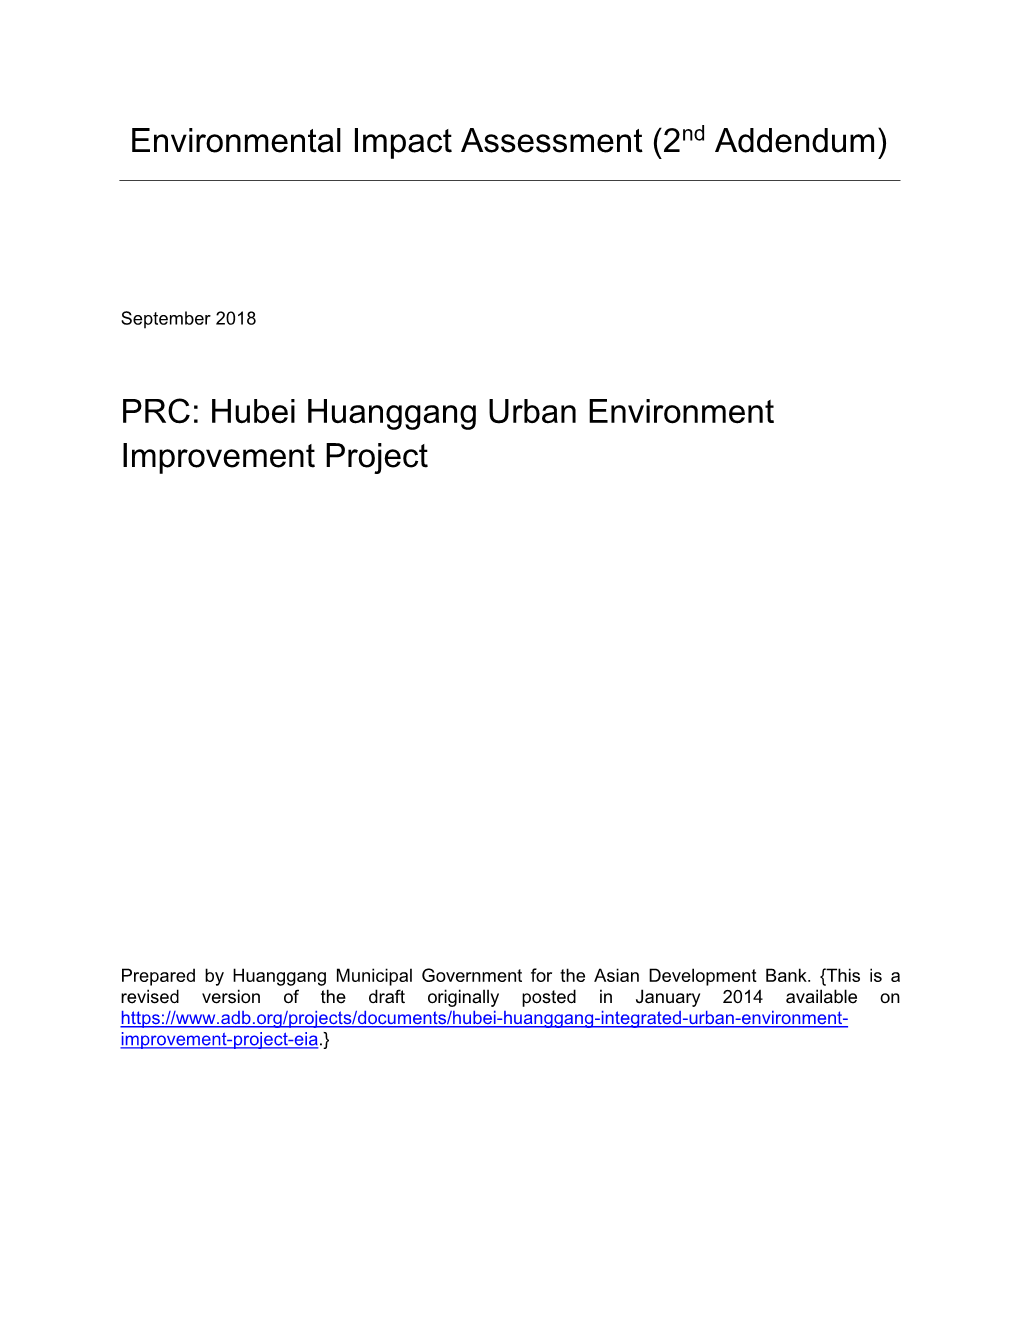 46050-002: Hubei Huanggang Urban Environment Improvement Project